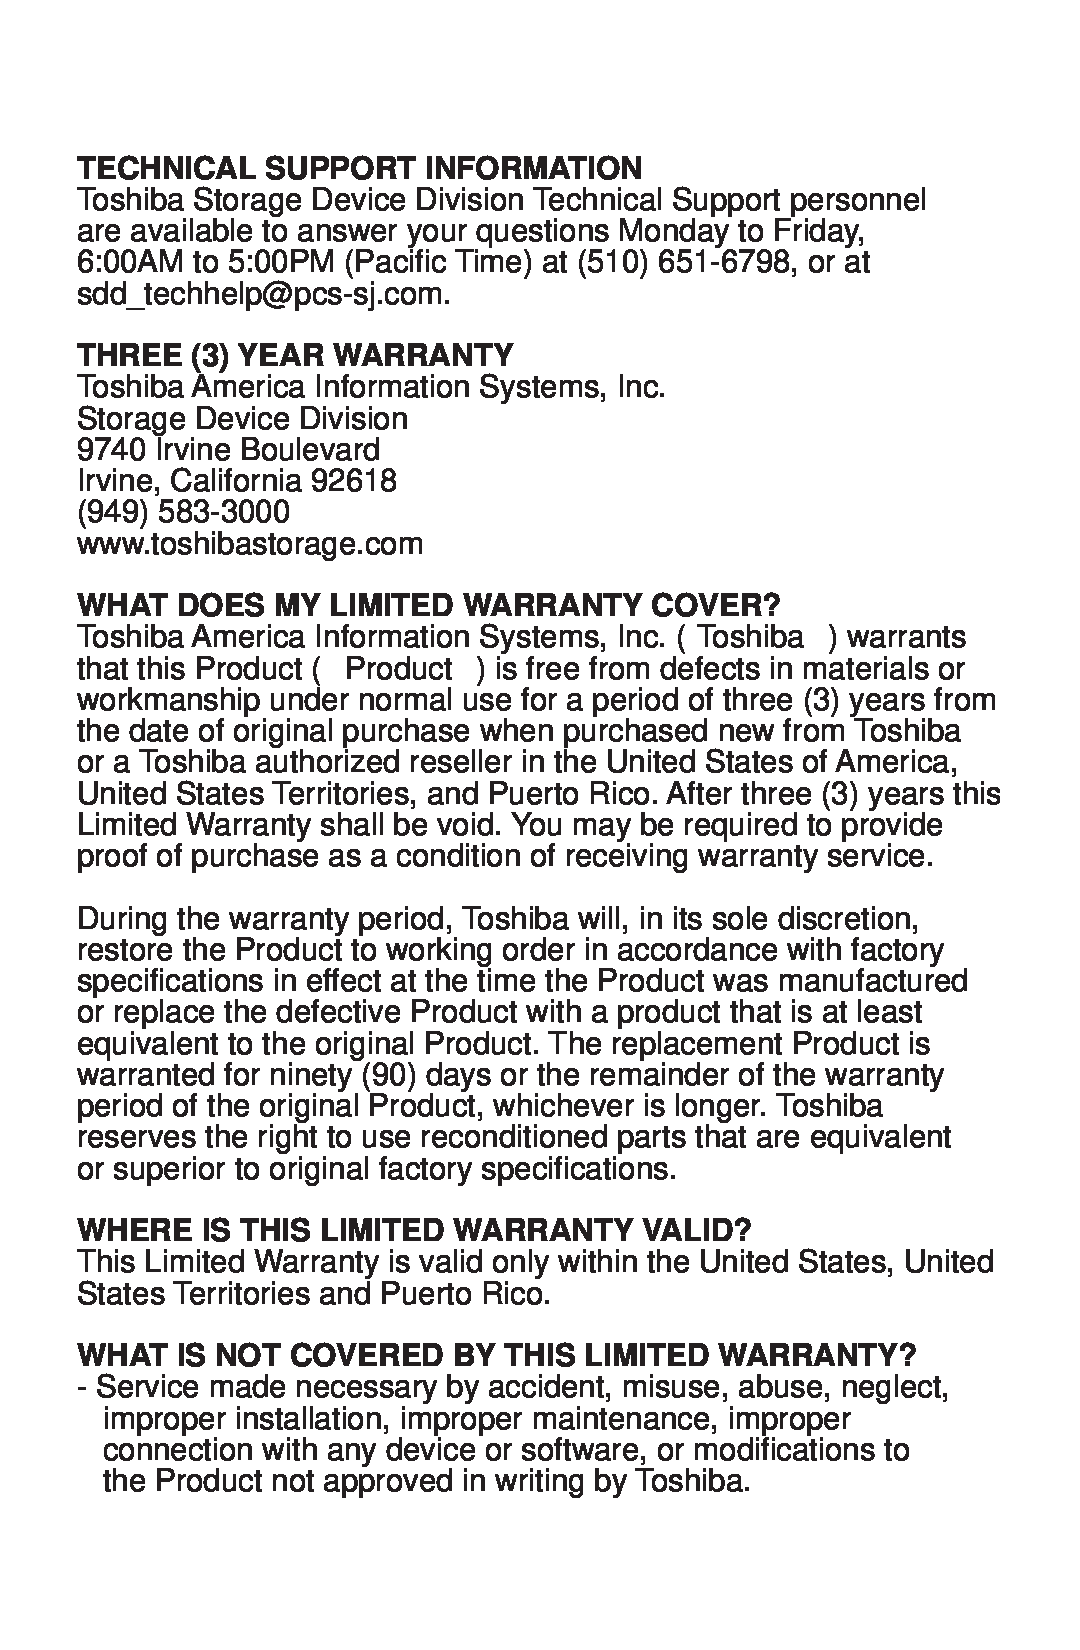 Toshiba 480082-D0 warranty Technical Support Information, THREE 3 YEAR WARRANTY, Irvine Boulevard Irvine, California 